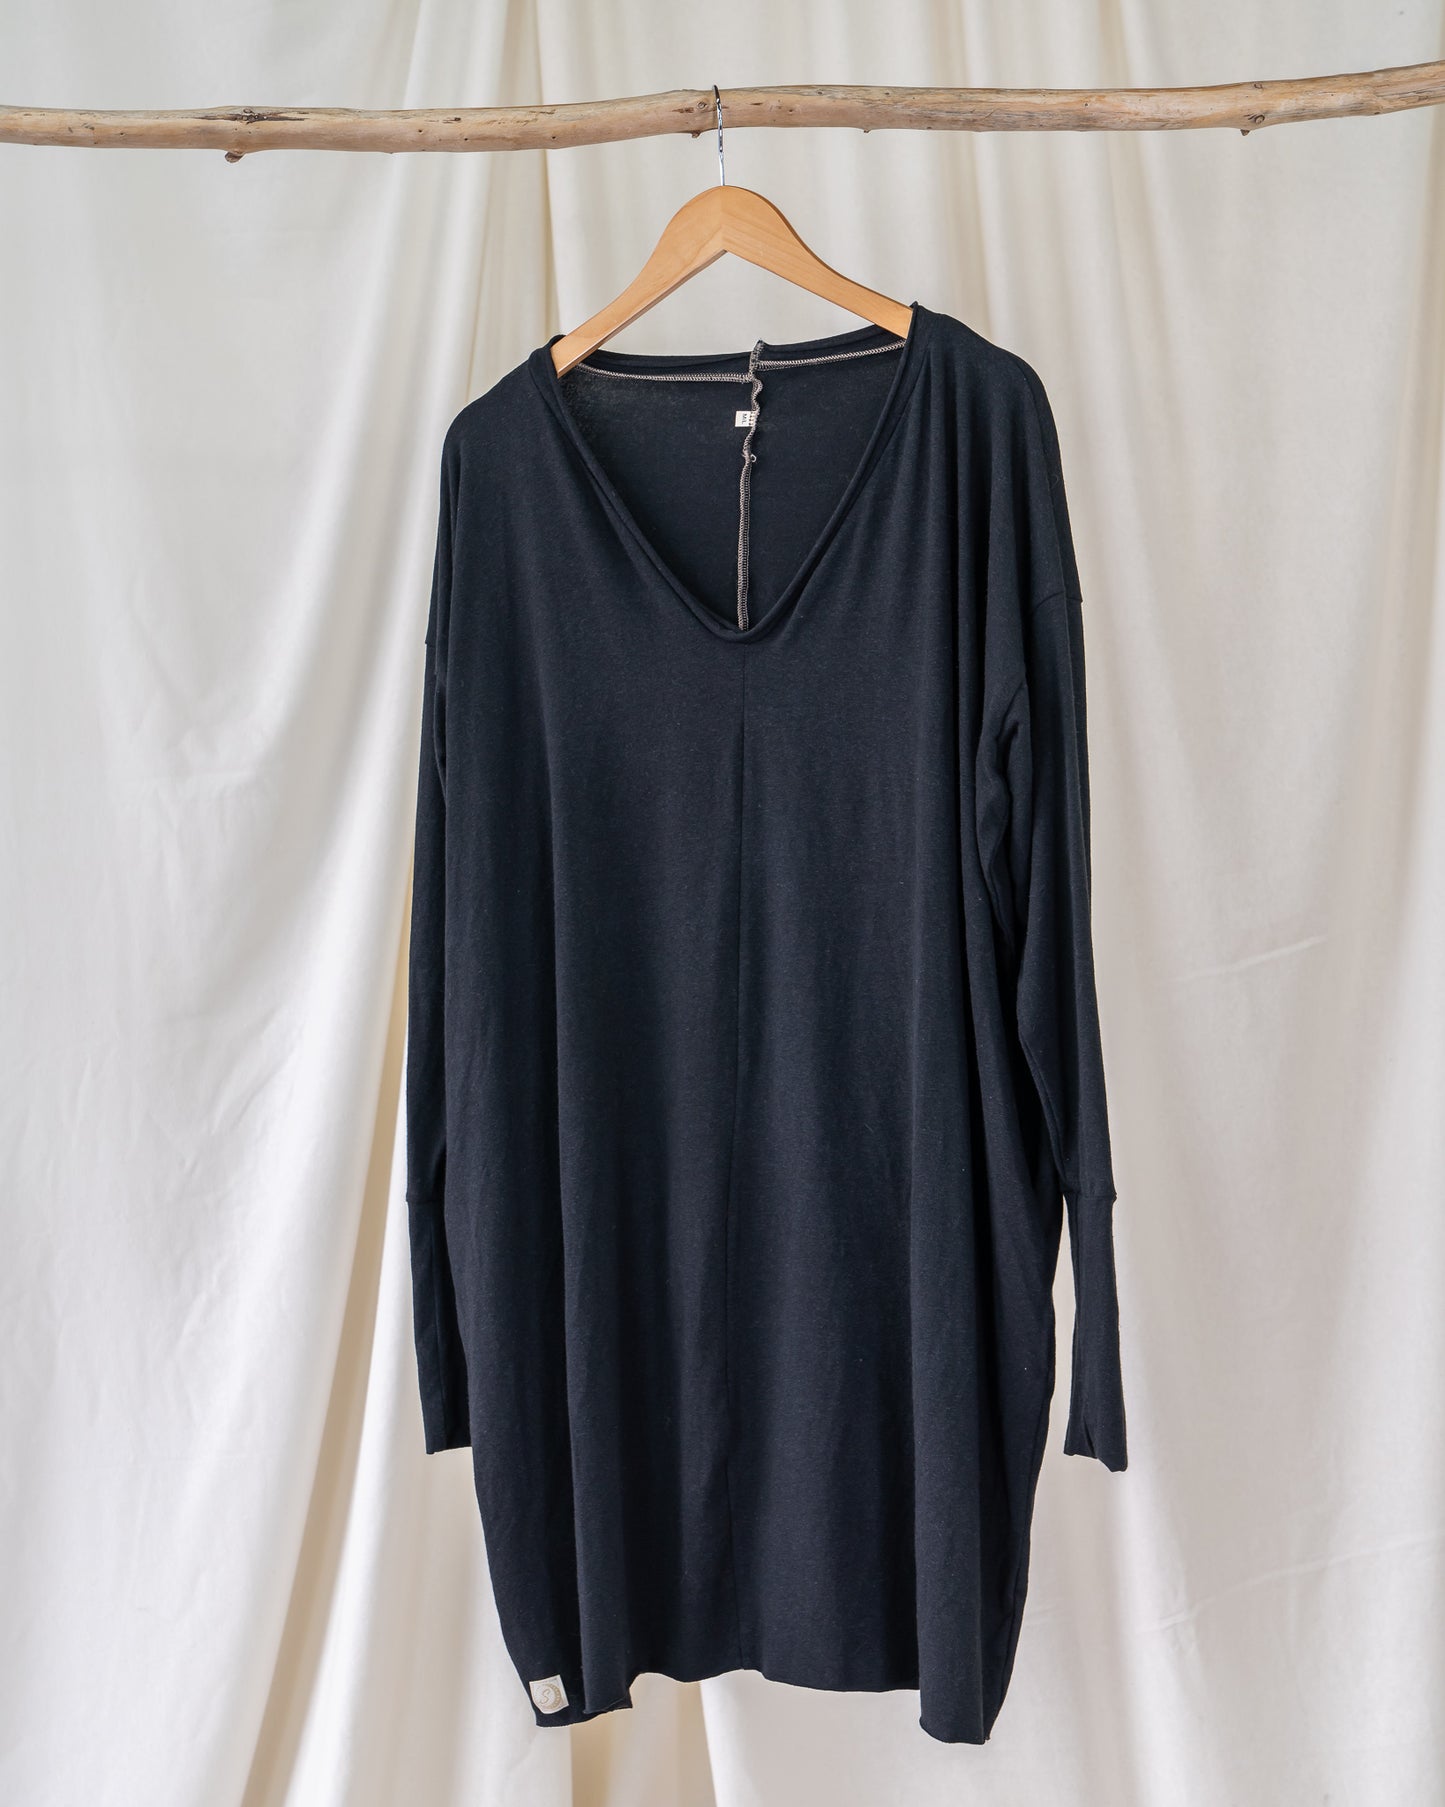 single black long sleeve shirt dress hanging on driftwood branch